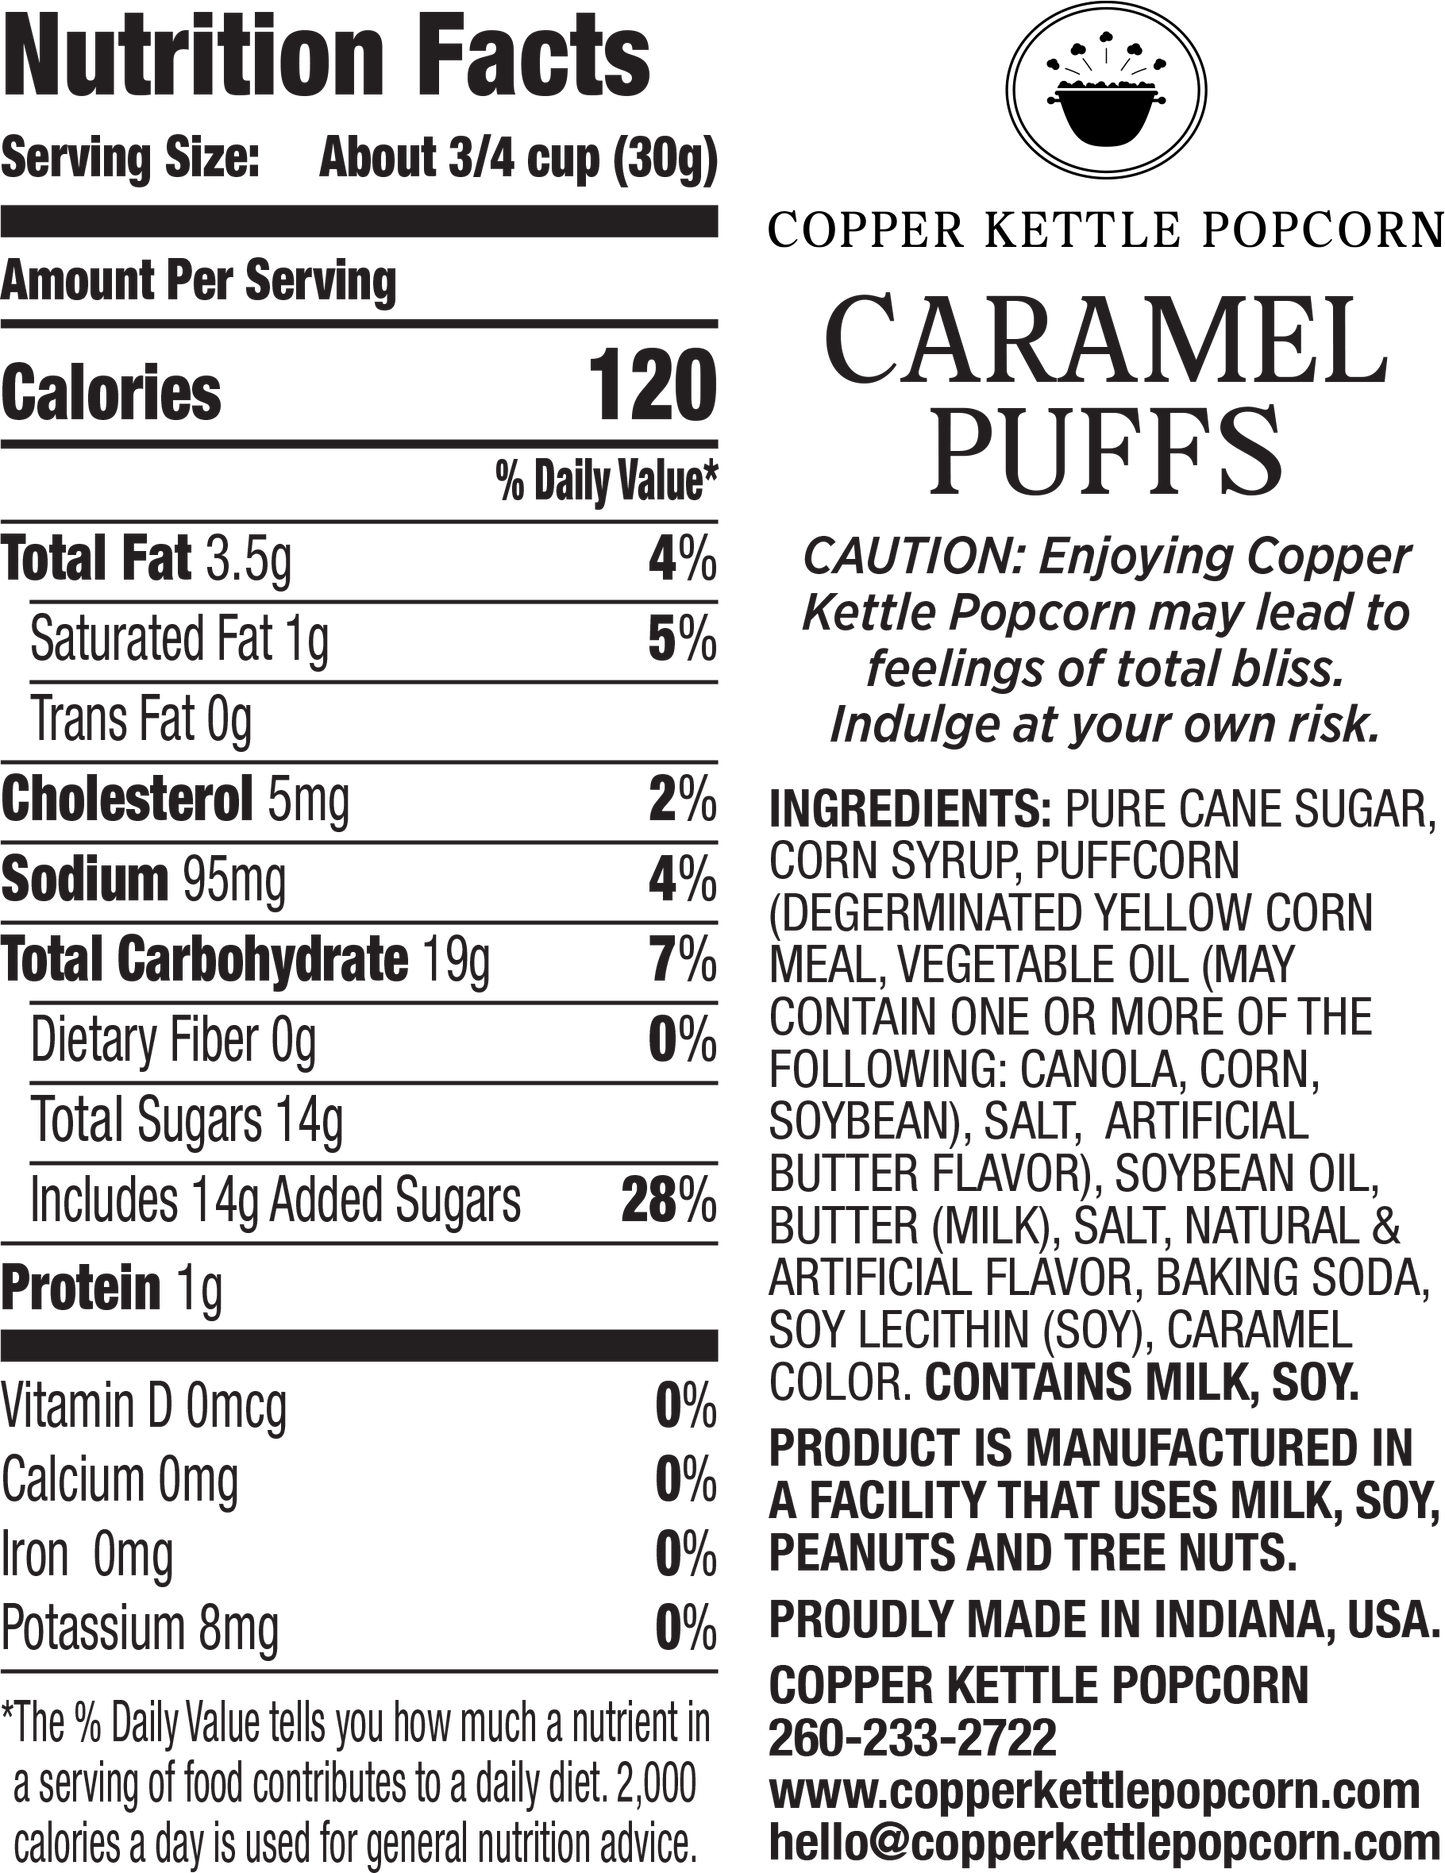 Caramel Puffs Bag 4 Servings Nutrition Label